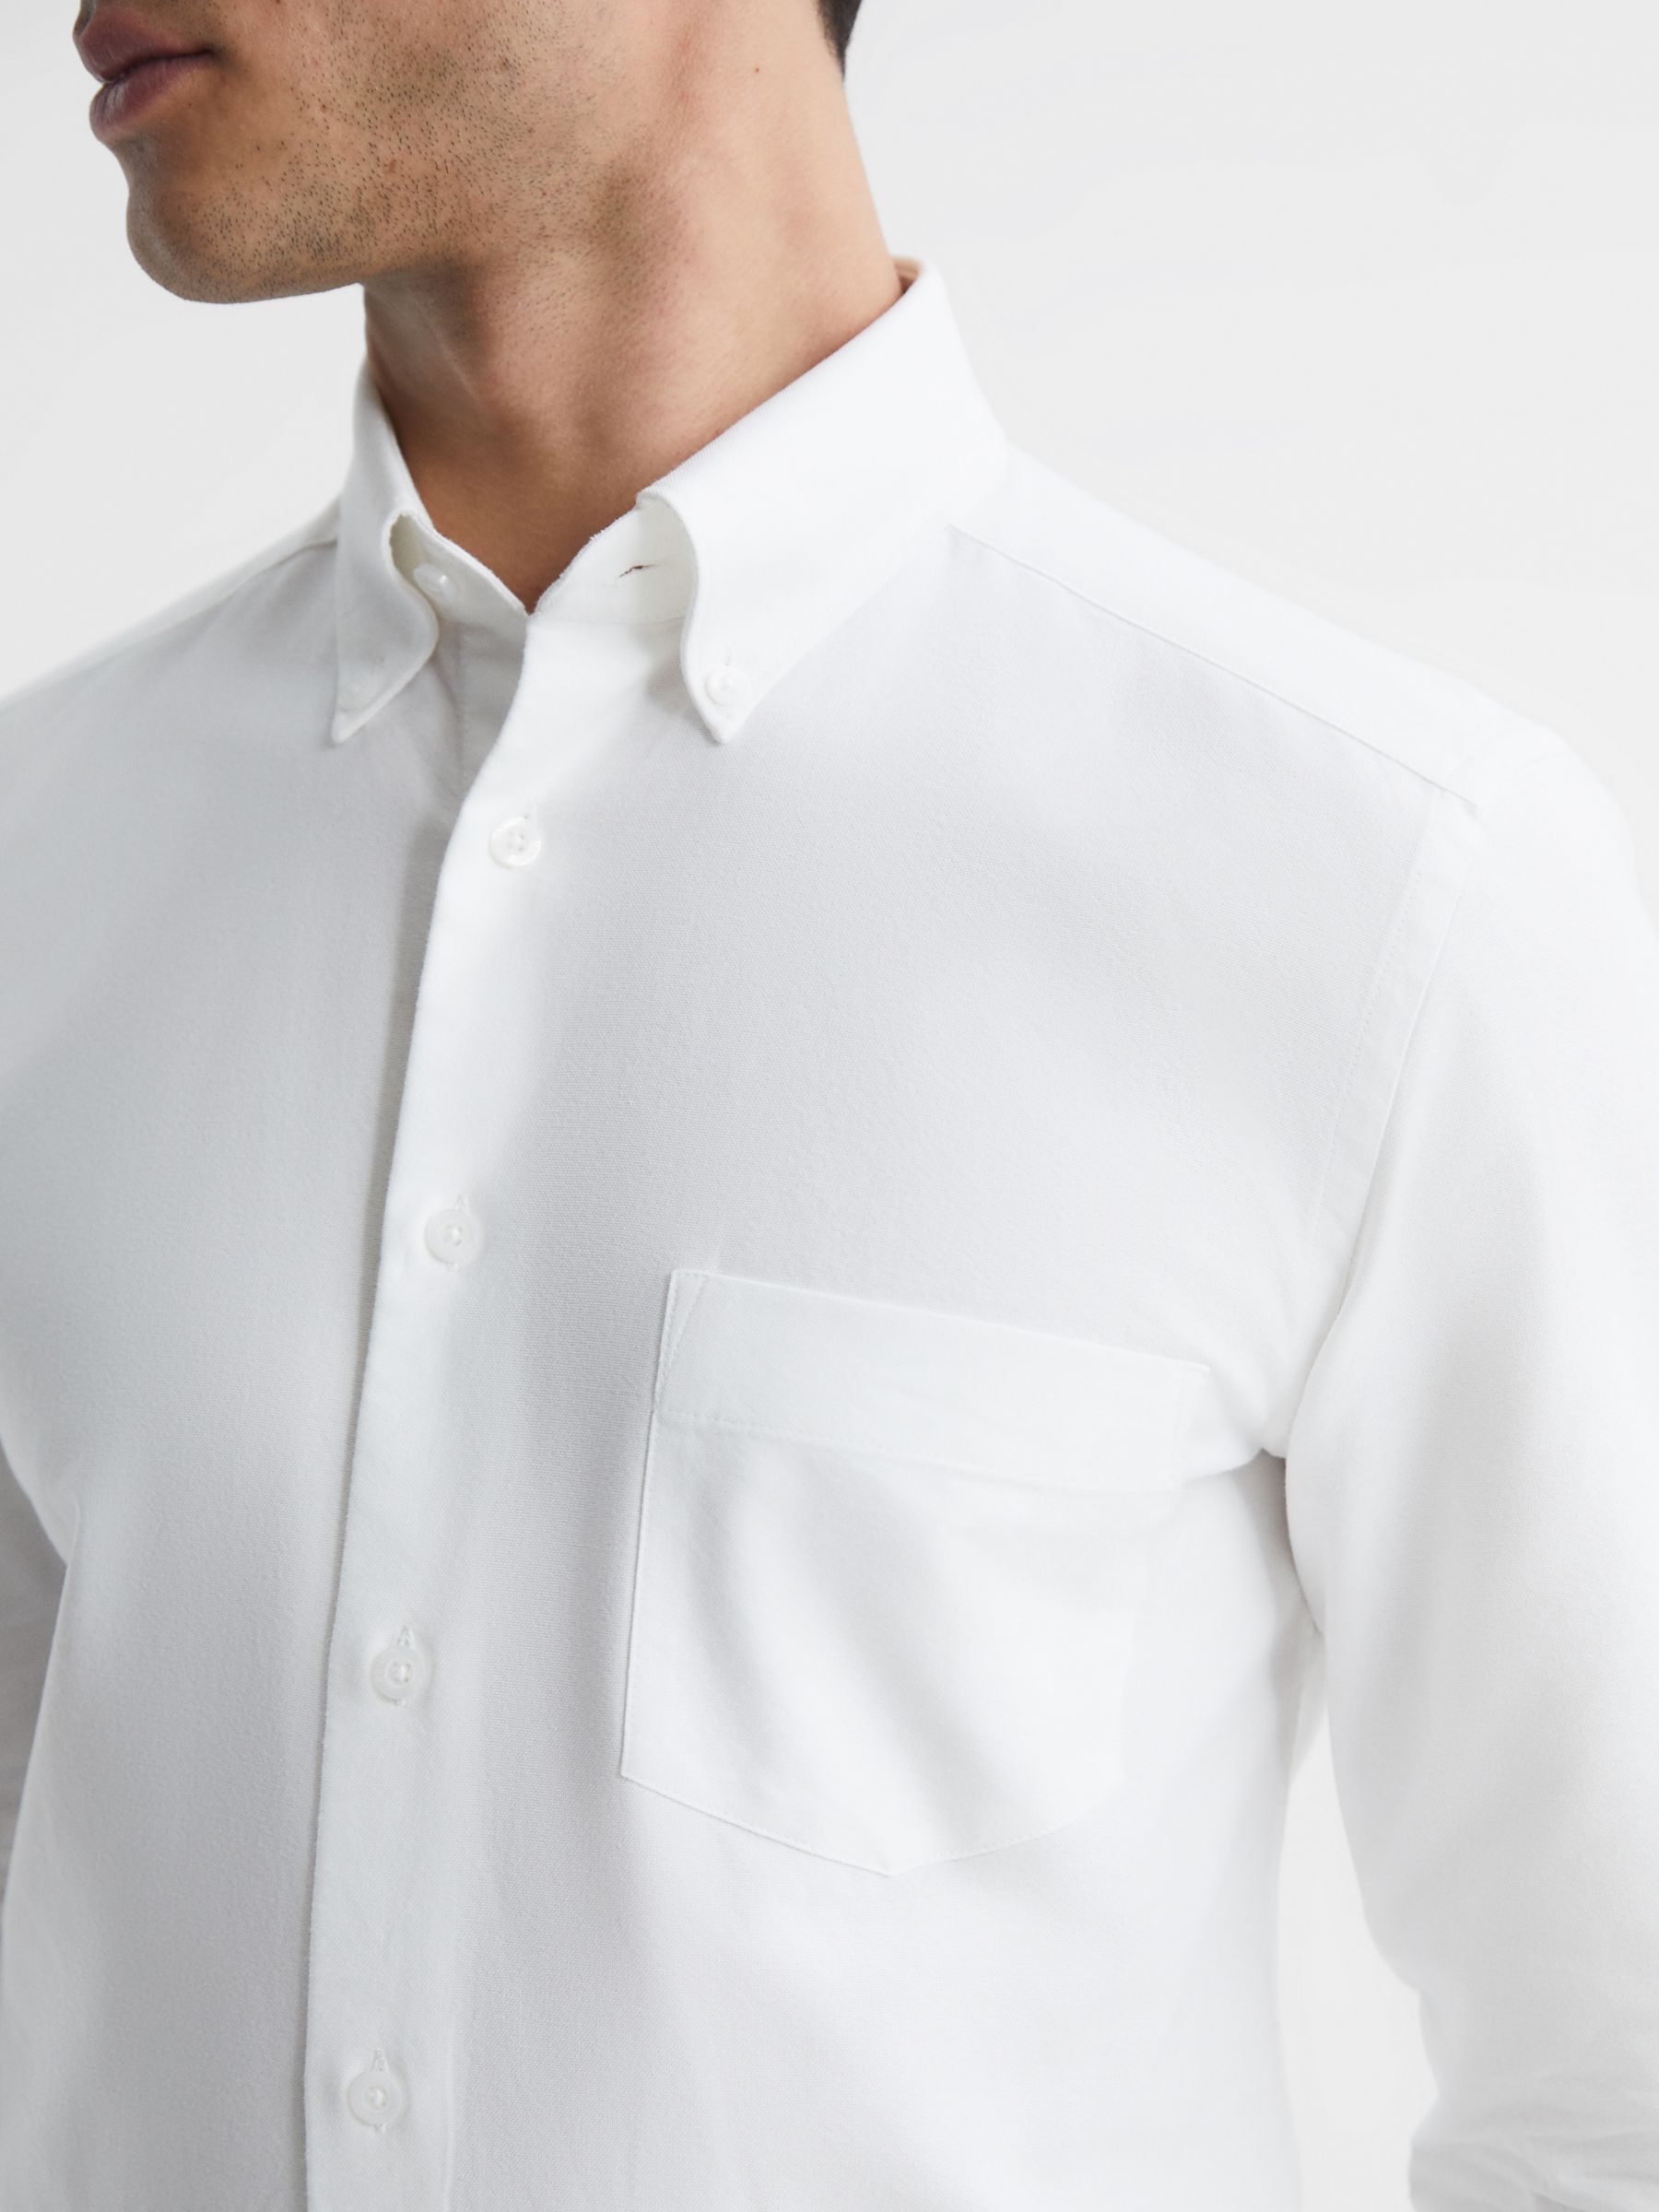 Reiss Greenwich Long Sleeve Oxford Shirt, White, XS